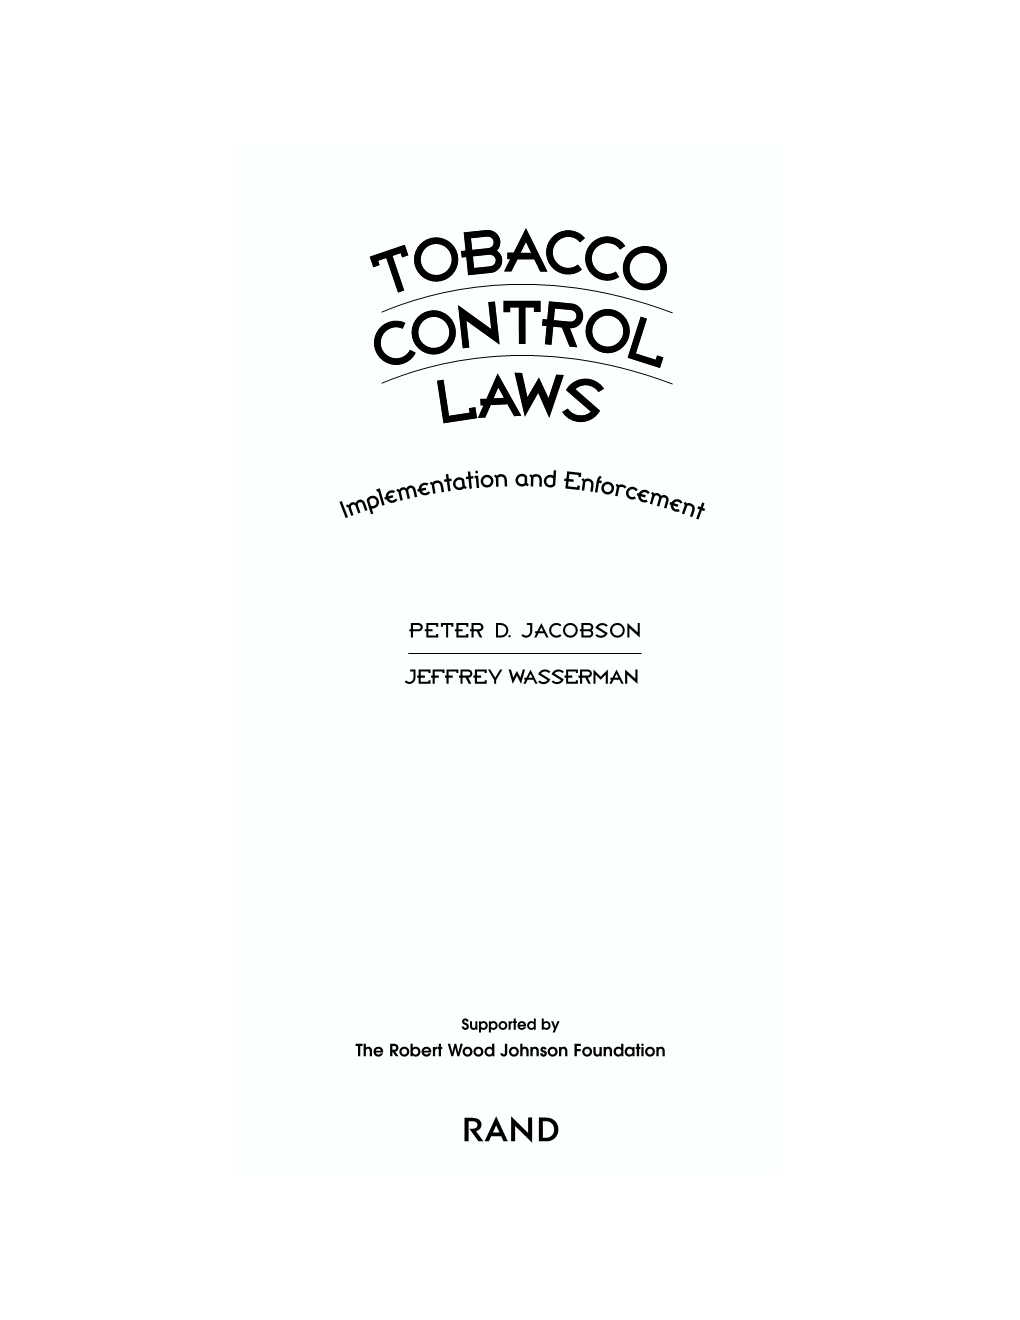 Tobacco Control Laws: Implementation and Enforcement / Peter D